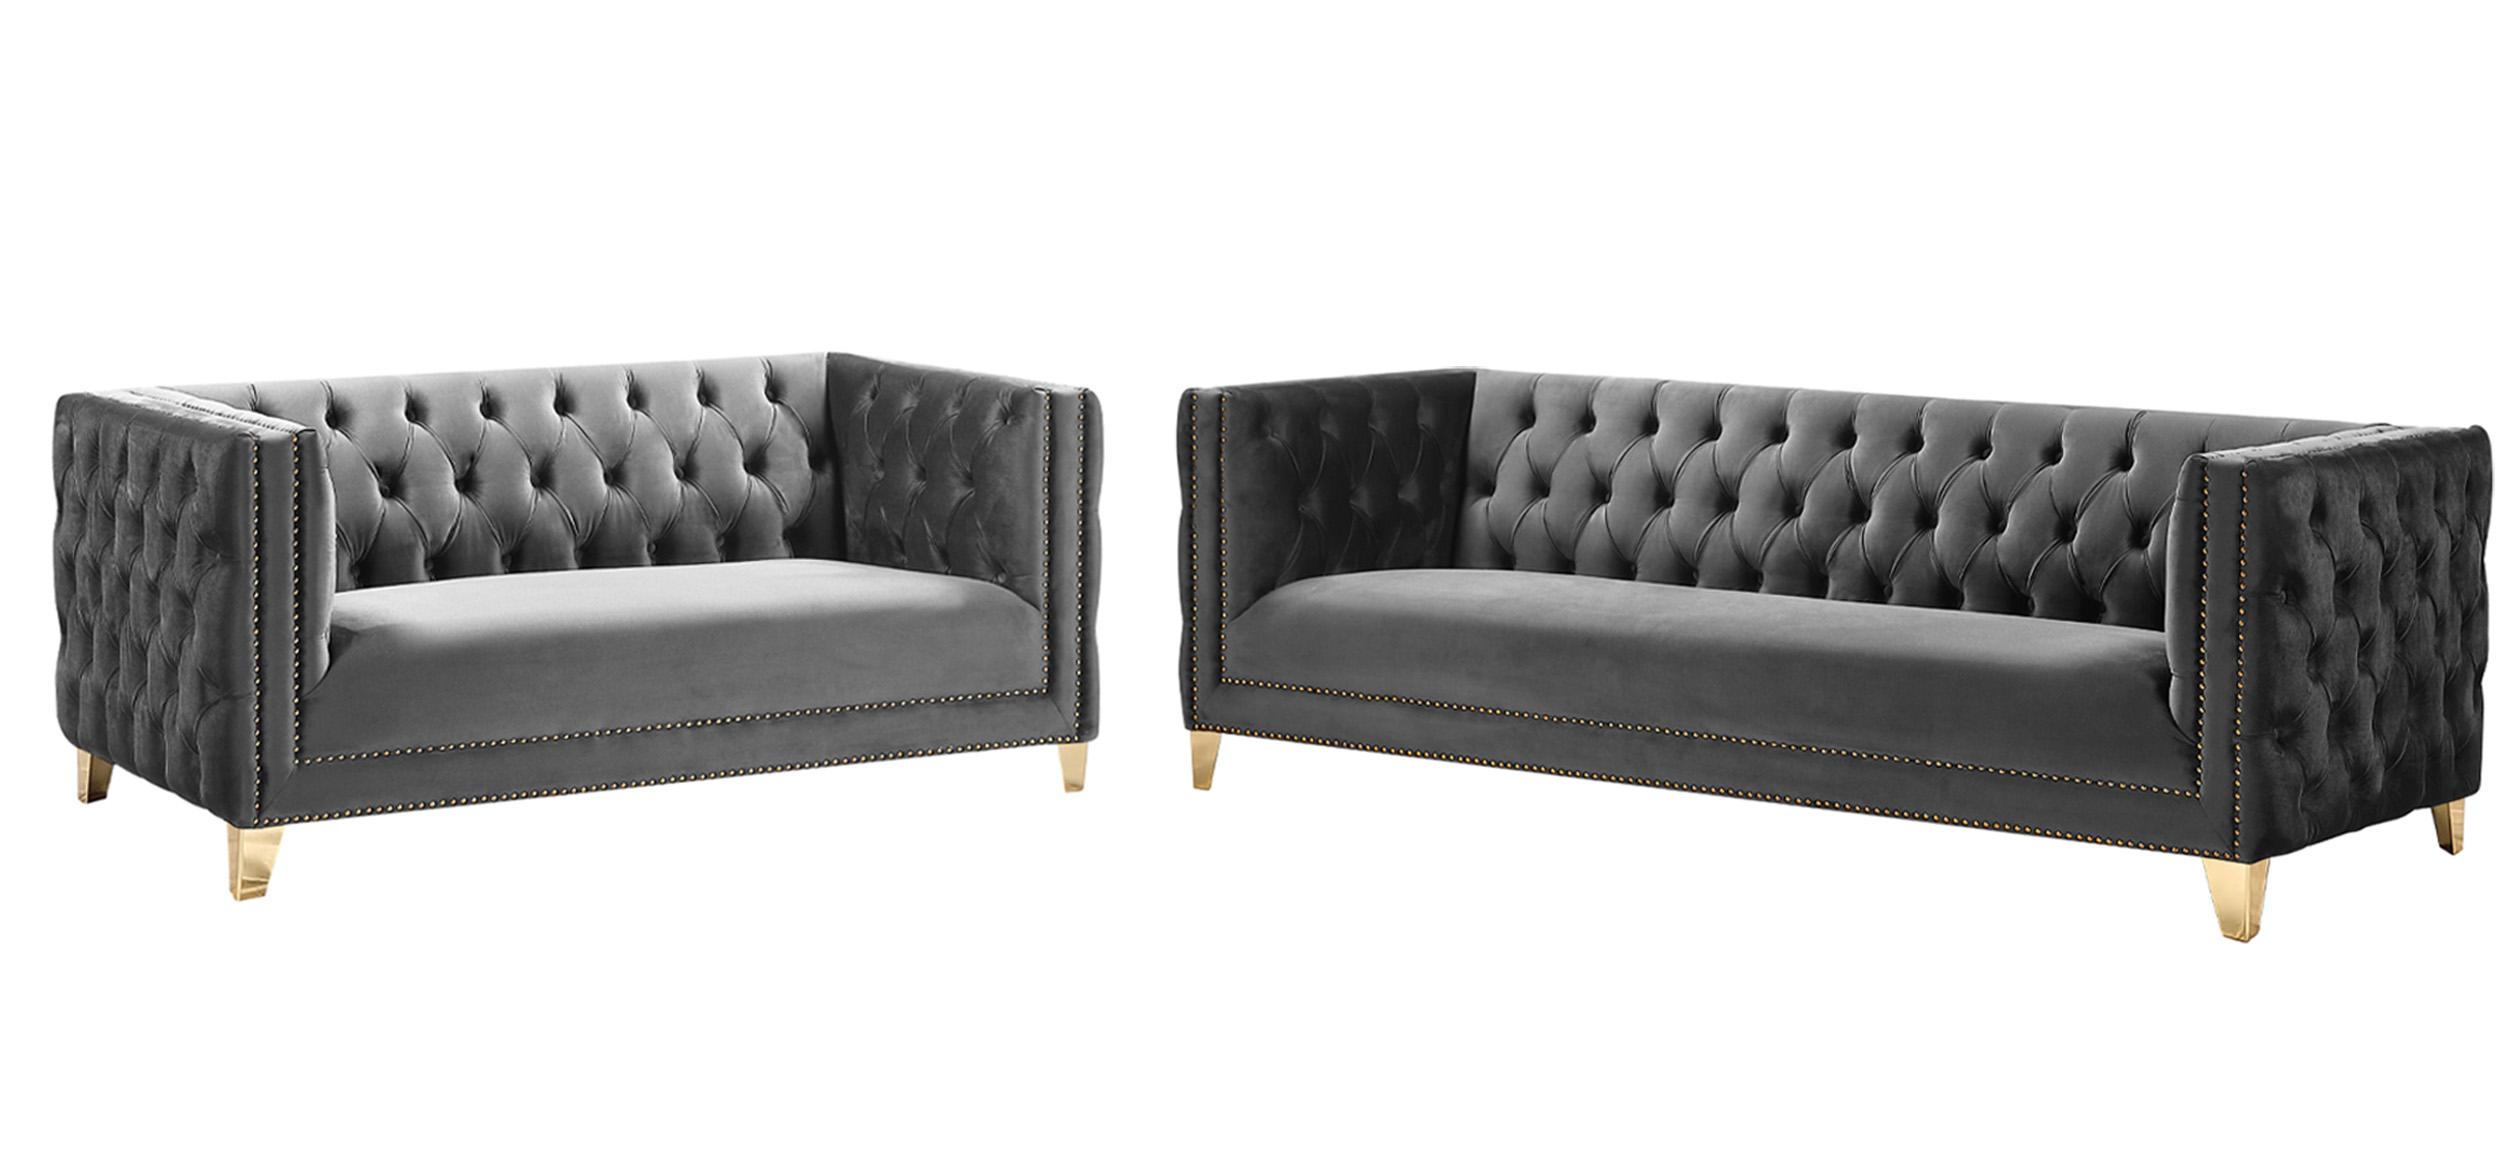 Contemporary, Modern Sofa Set MICHELLE 652Grey-S-Set-2 652Grey-S-Set-2 in Gray Velvet